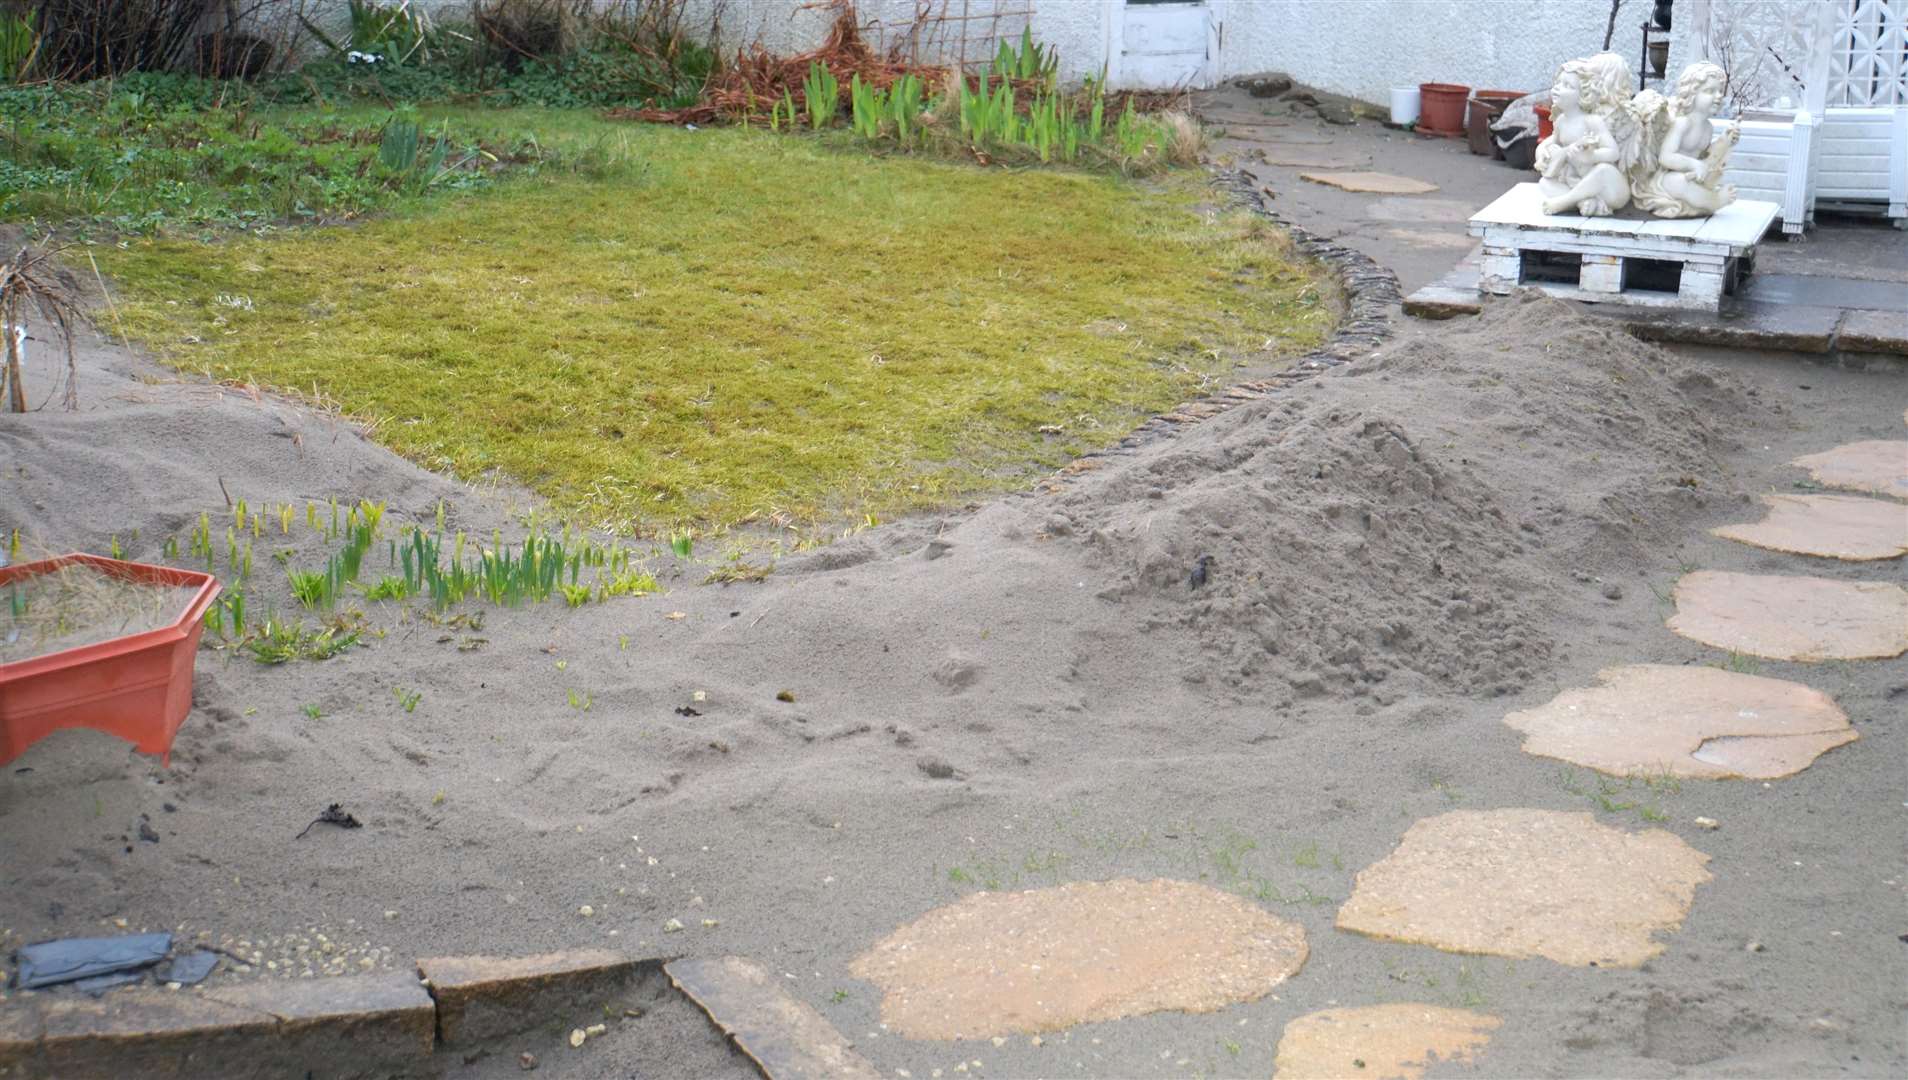 Sand shovelled into piles in a garden.